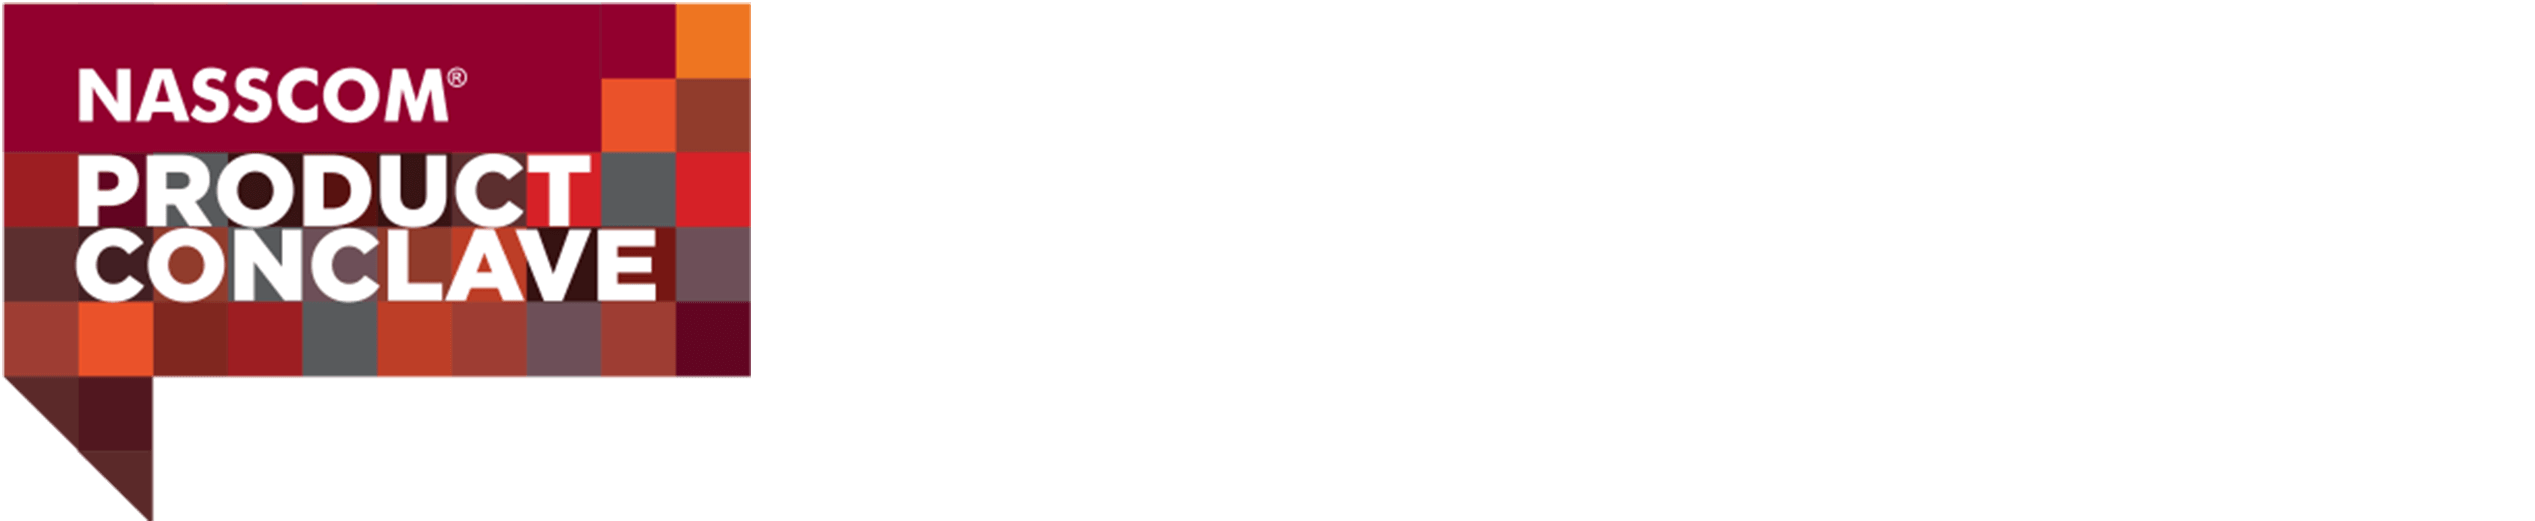 Nasscom Product Conclave Logo